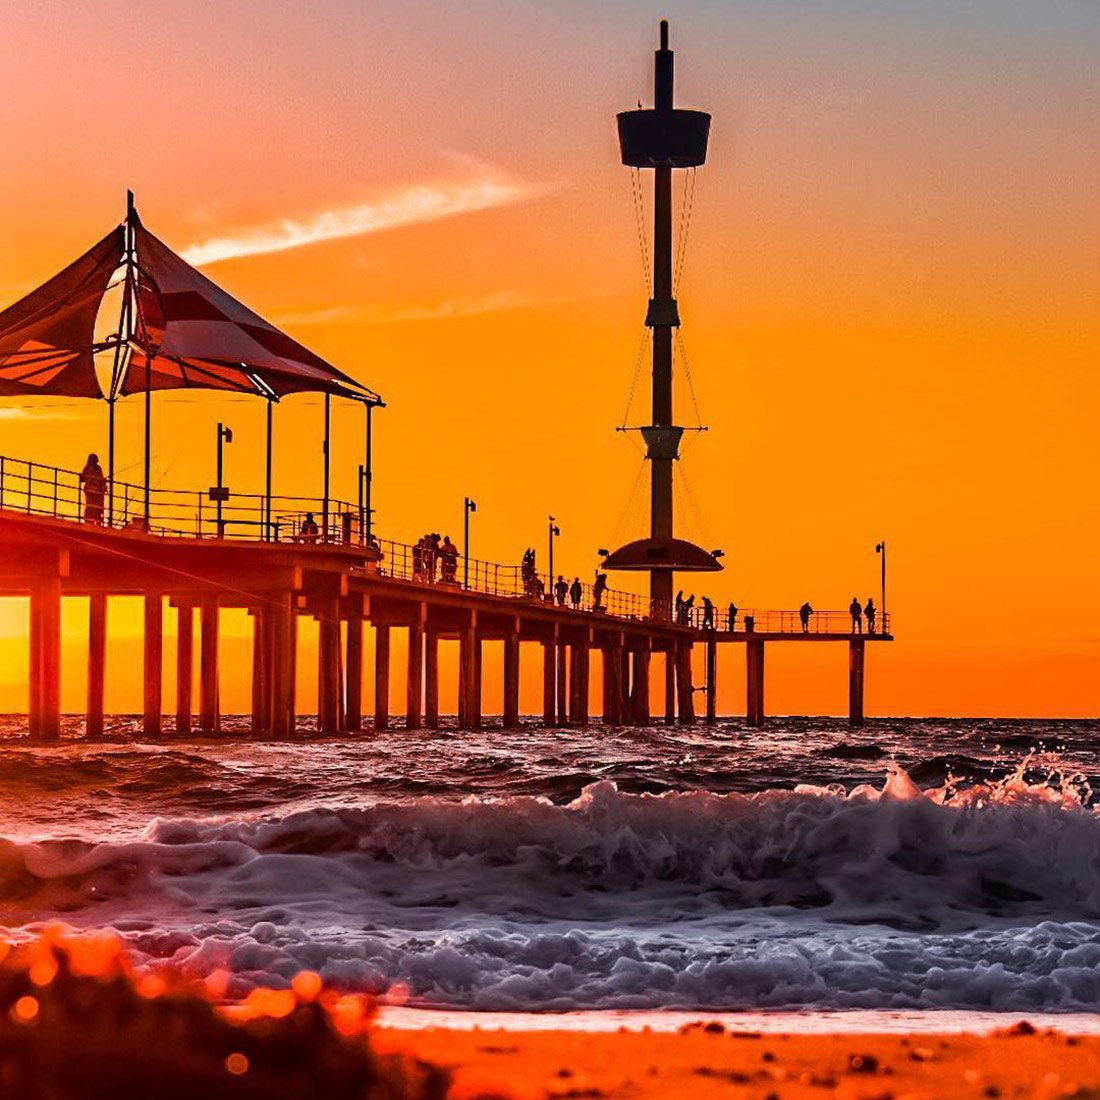 Brighton Beach, Adelaide by @emansmithphotography